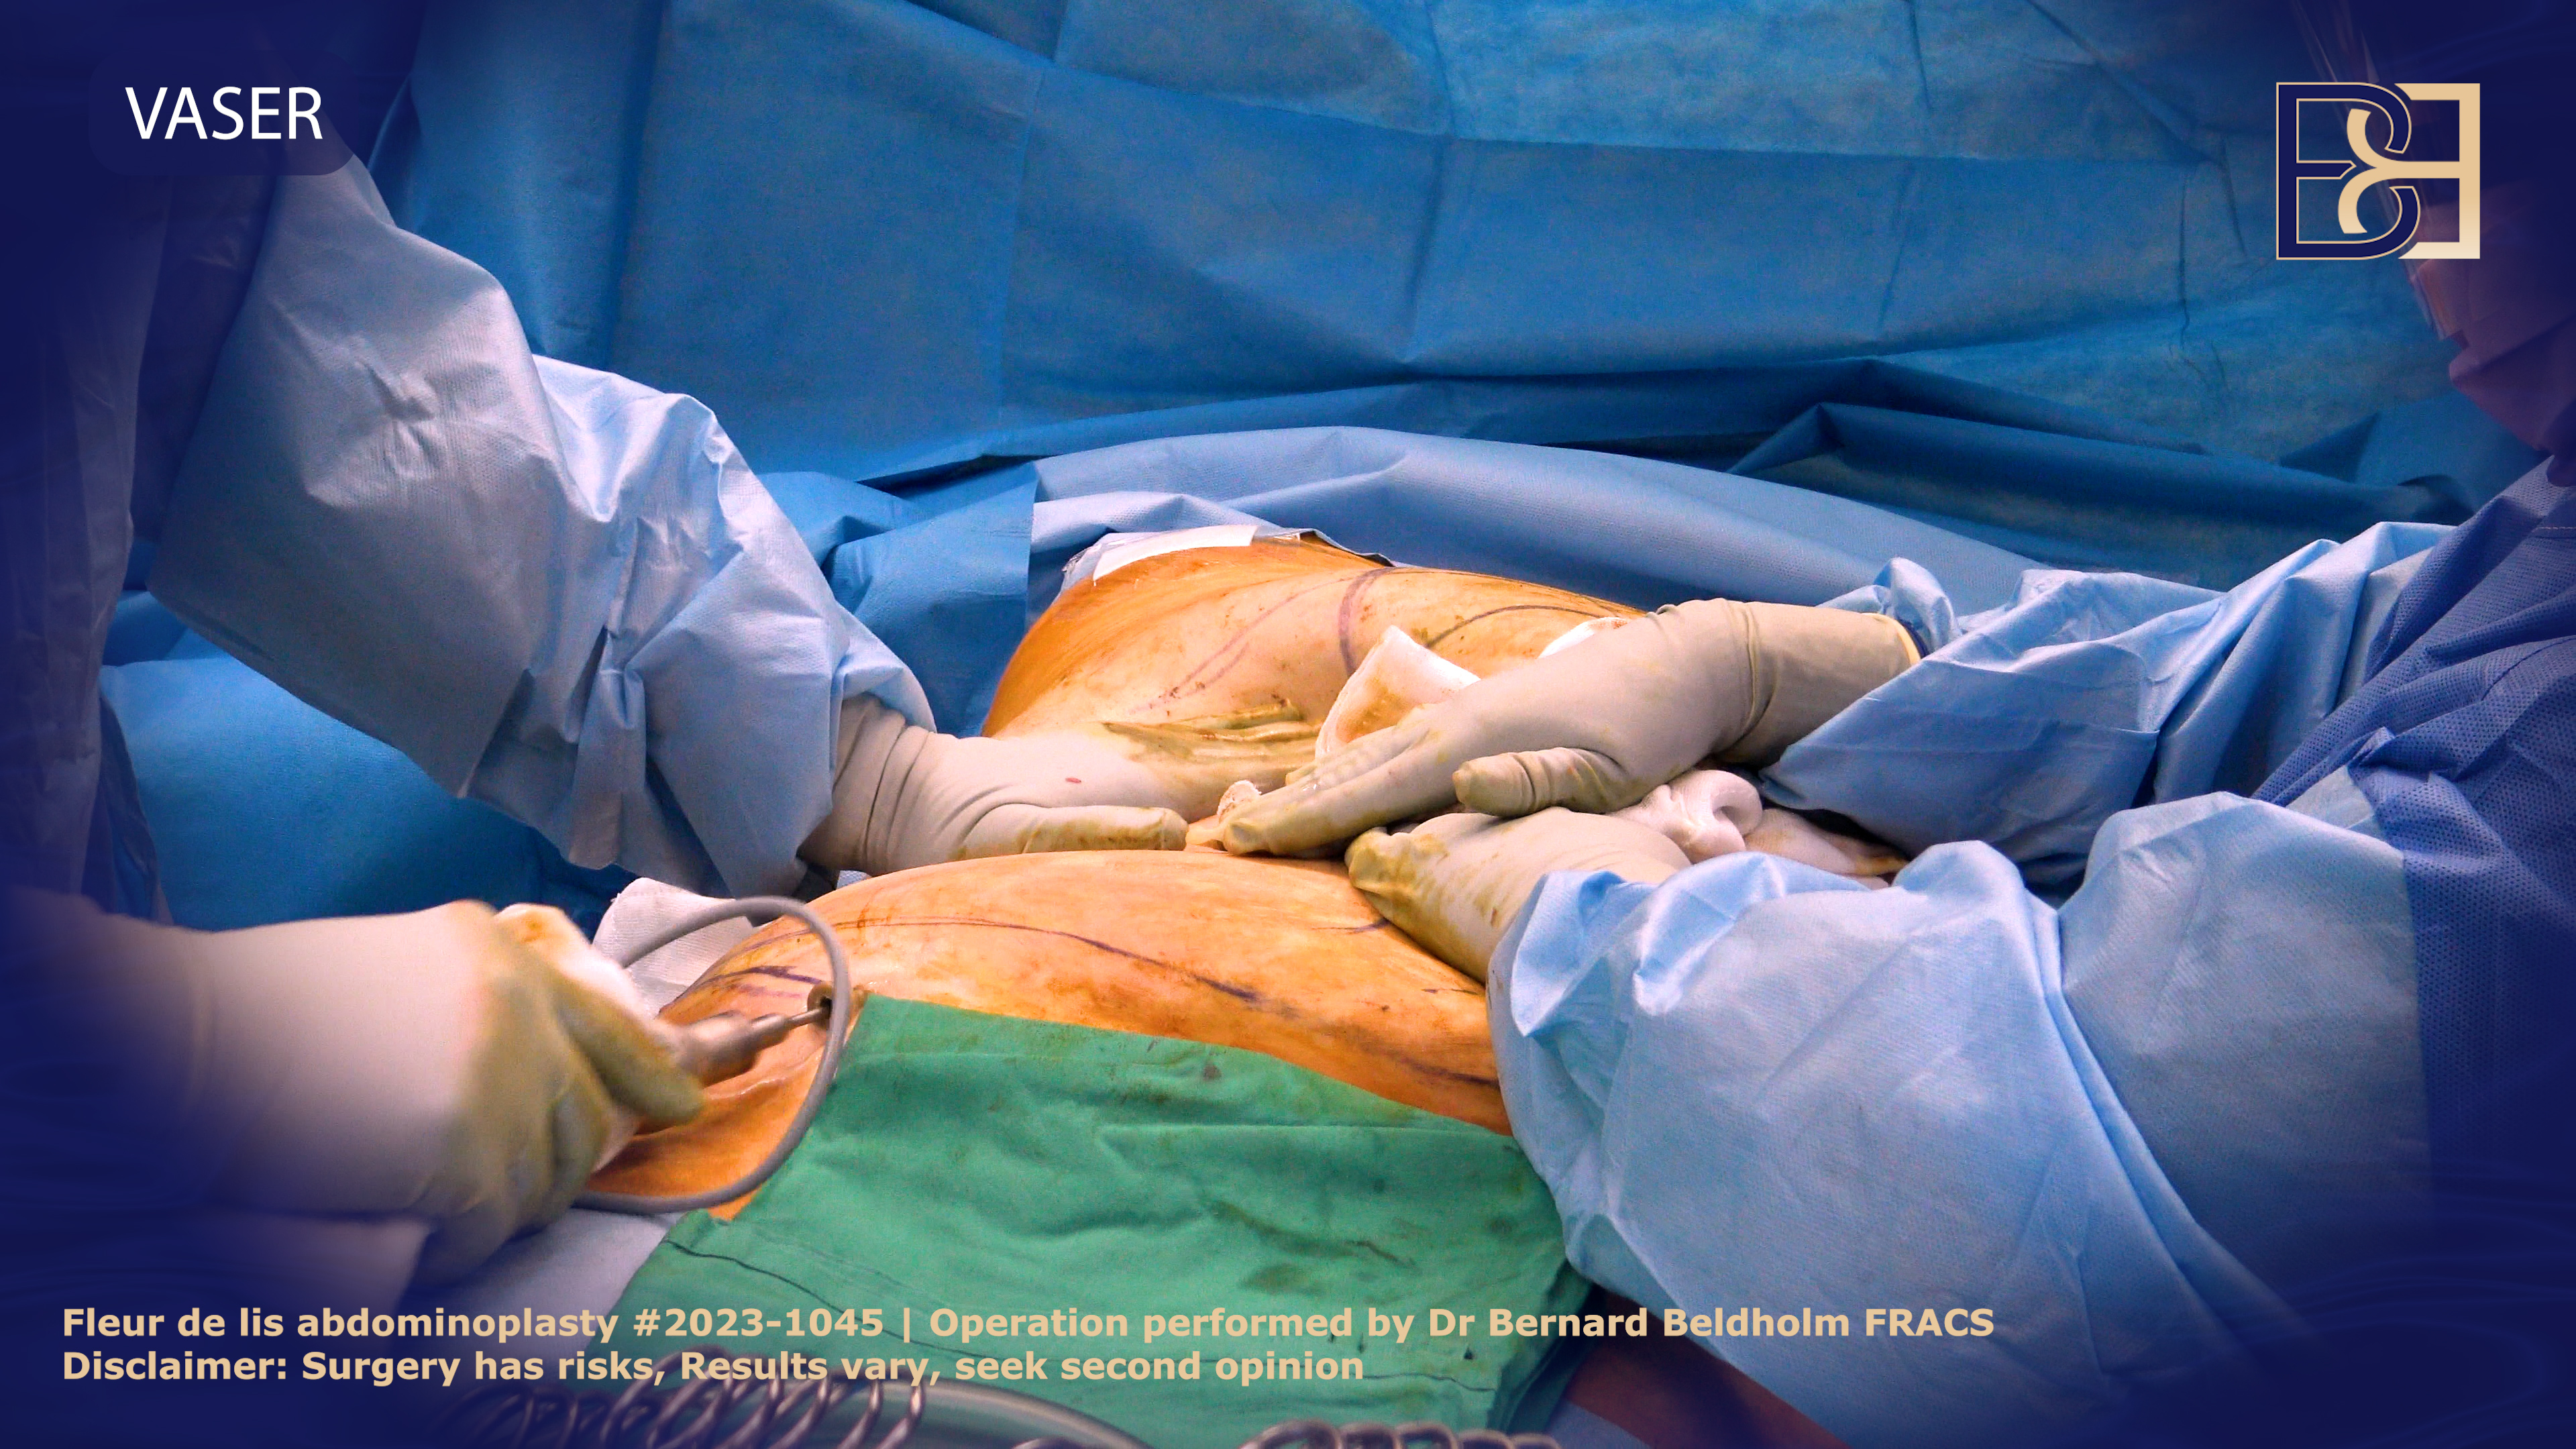 VASER liposuction during an abdominoplasty performed by Dr Beldholm